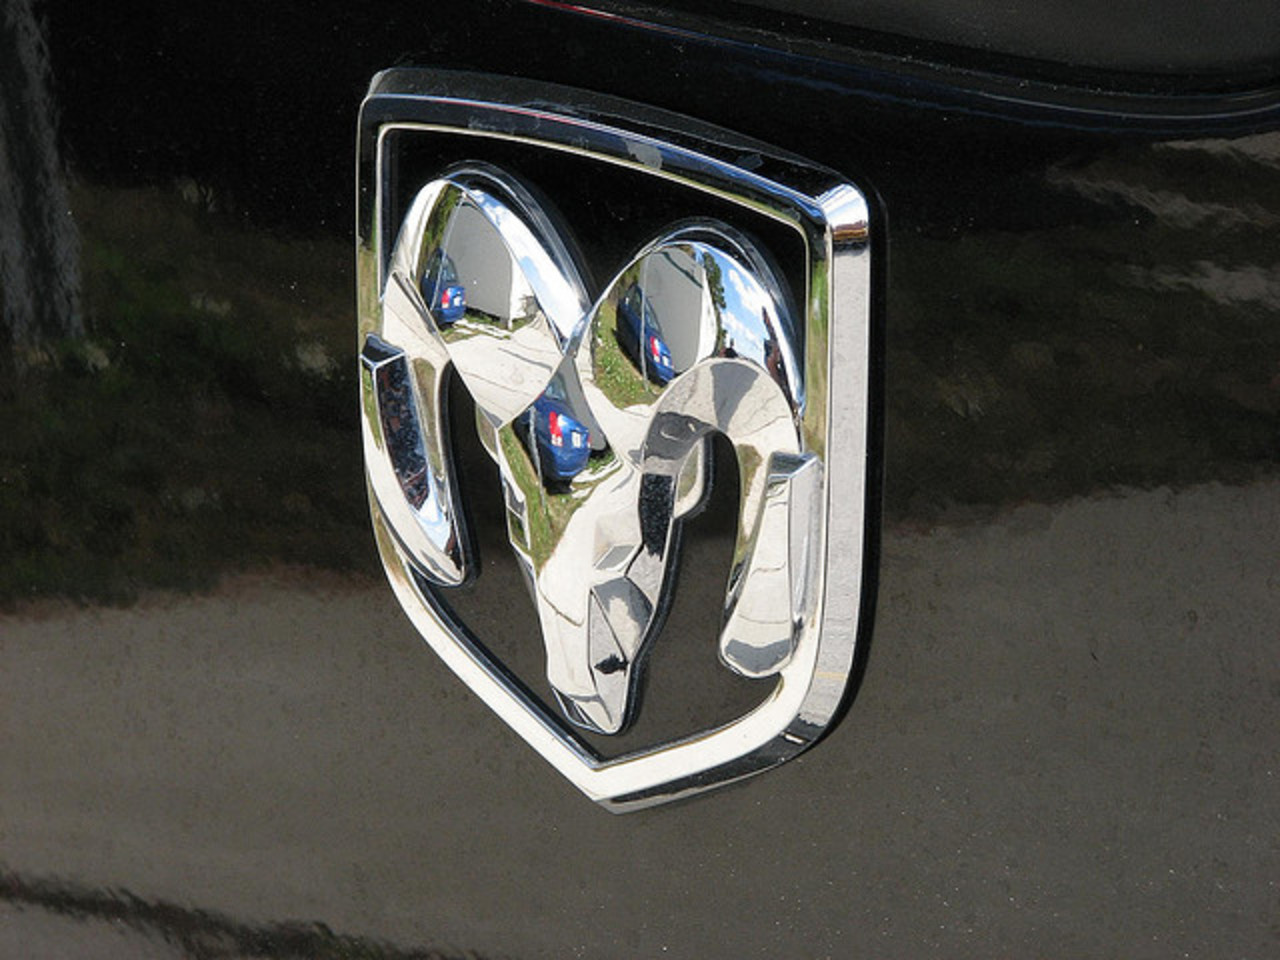 2006 Dodge Ram 1500 Hemi Sport | Flickr - Photo Sharing!